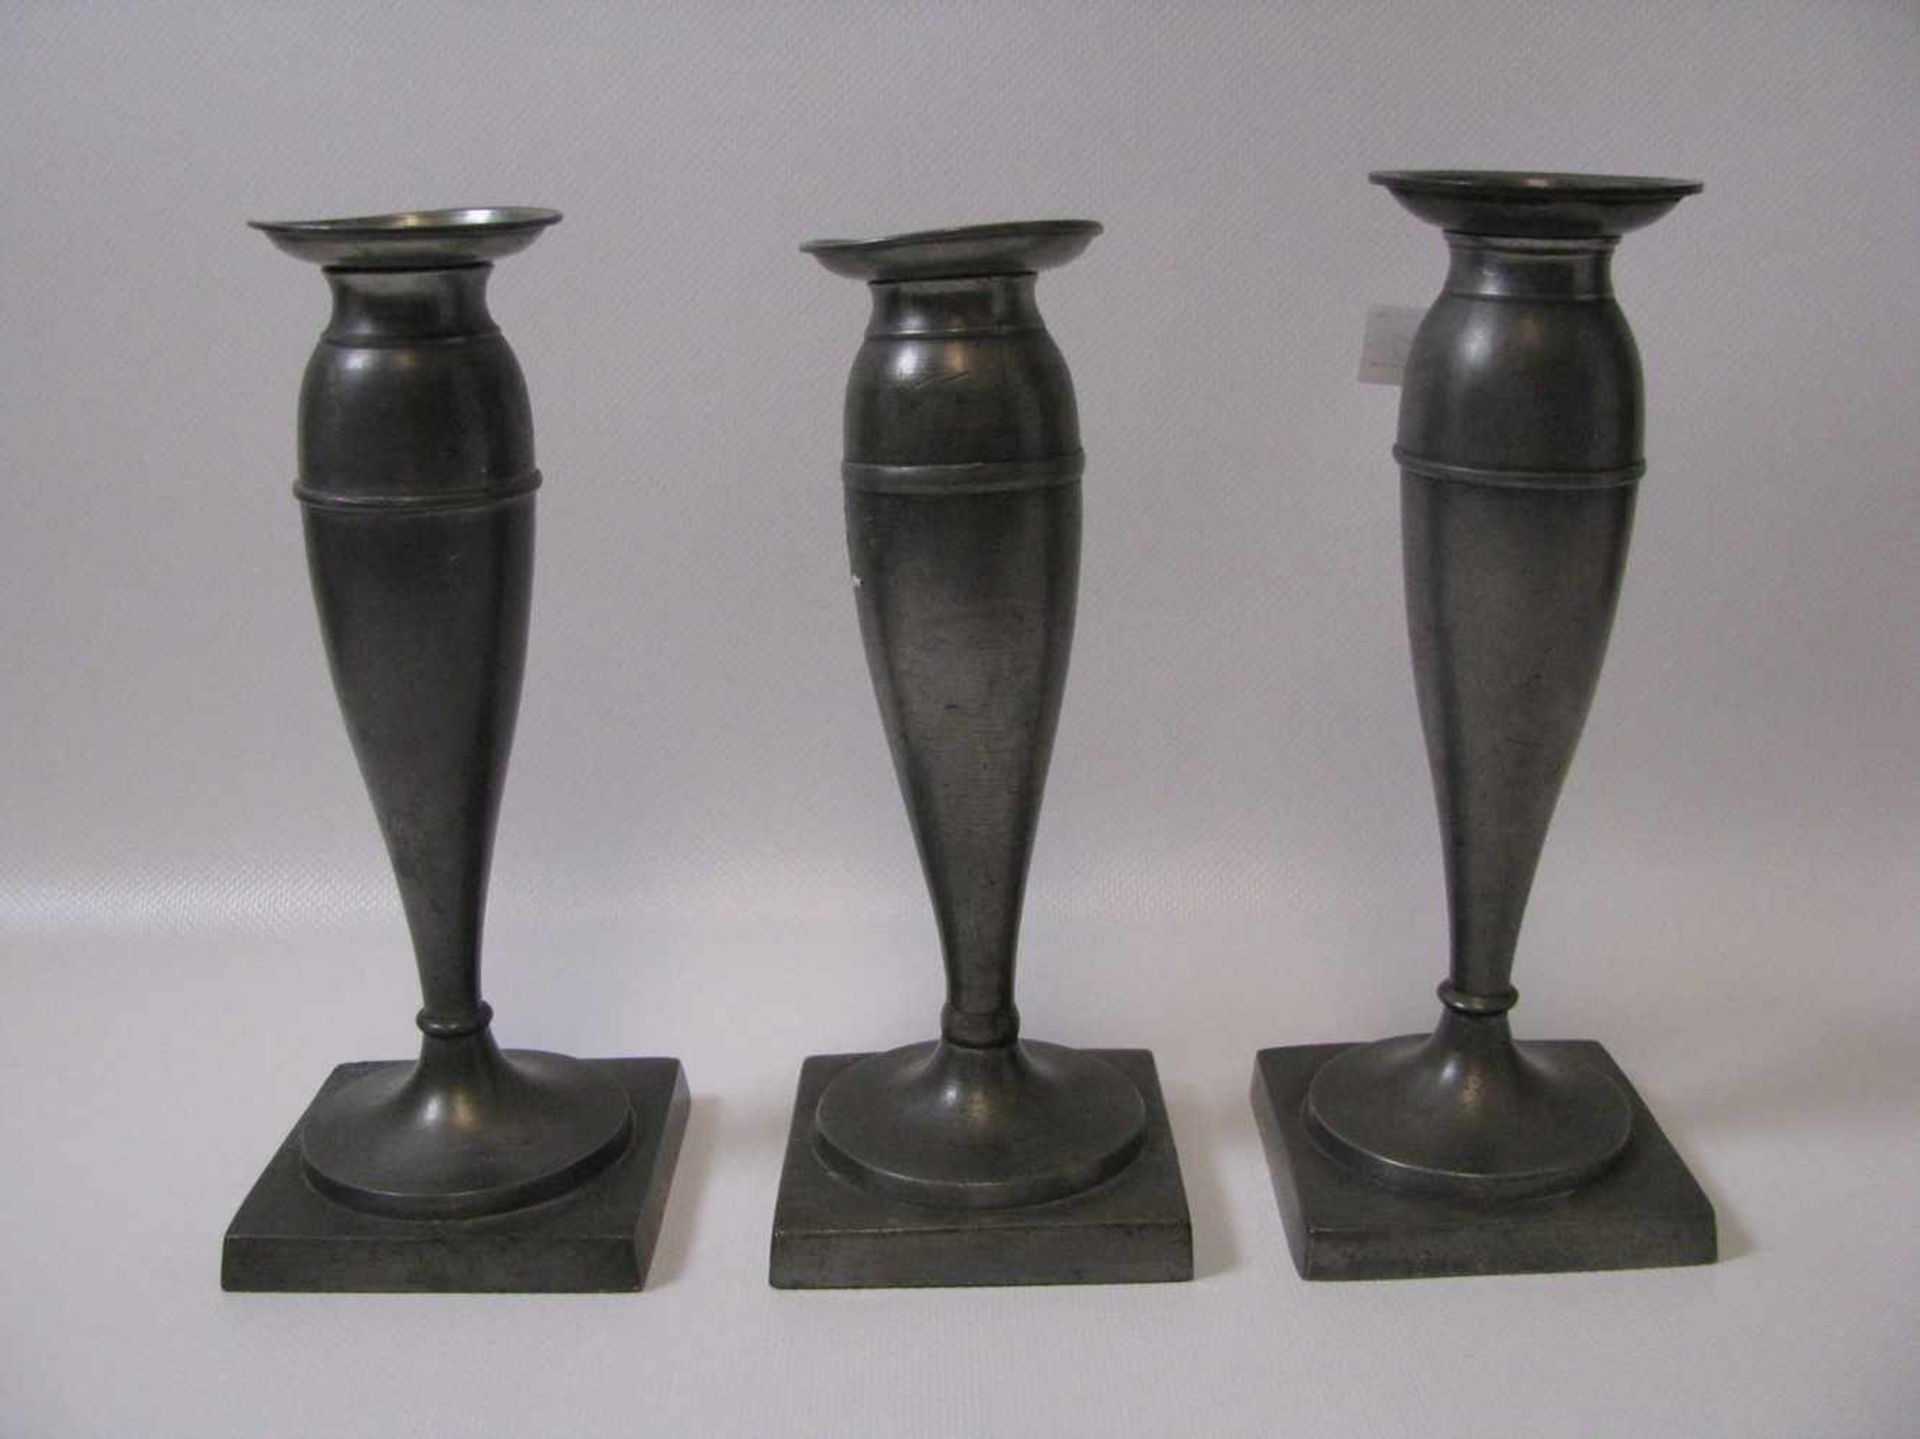 3 Kerzenleuchter, um 1900, Zinn, h 19,5 cm, d 8 cm.- - -19.00 % buyer's premium on the hammer